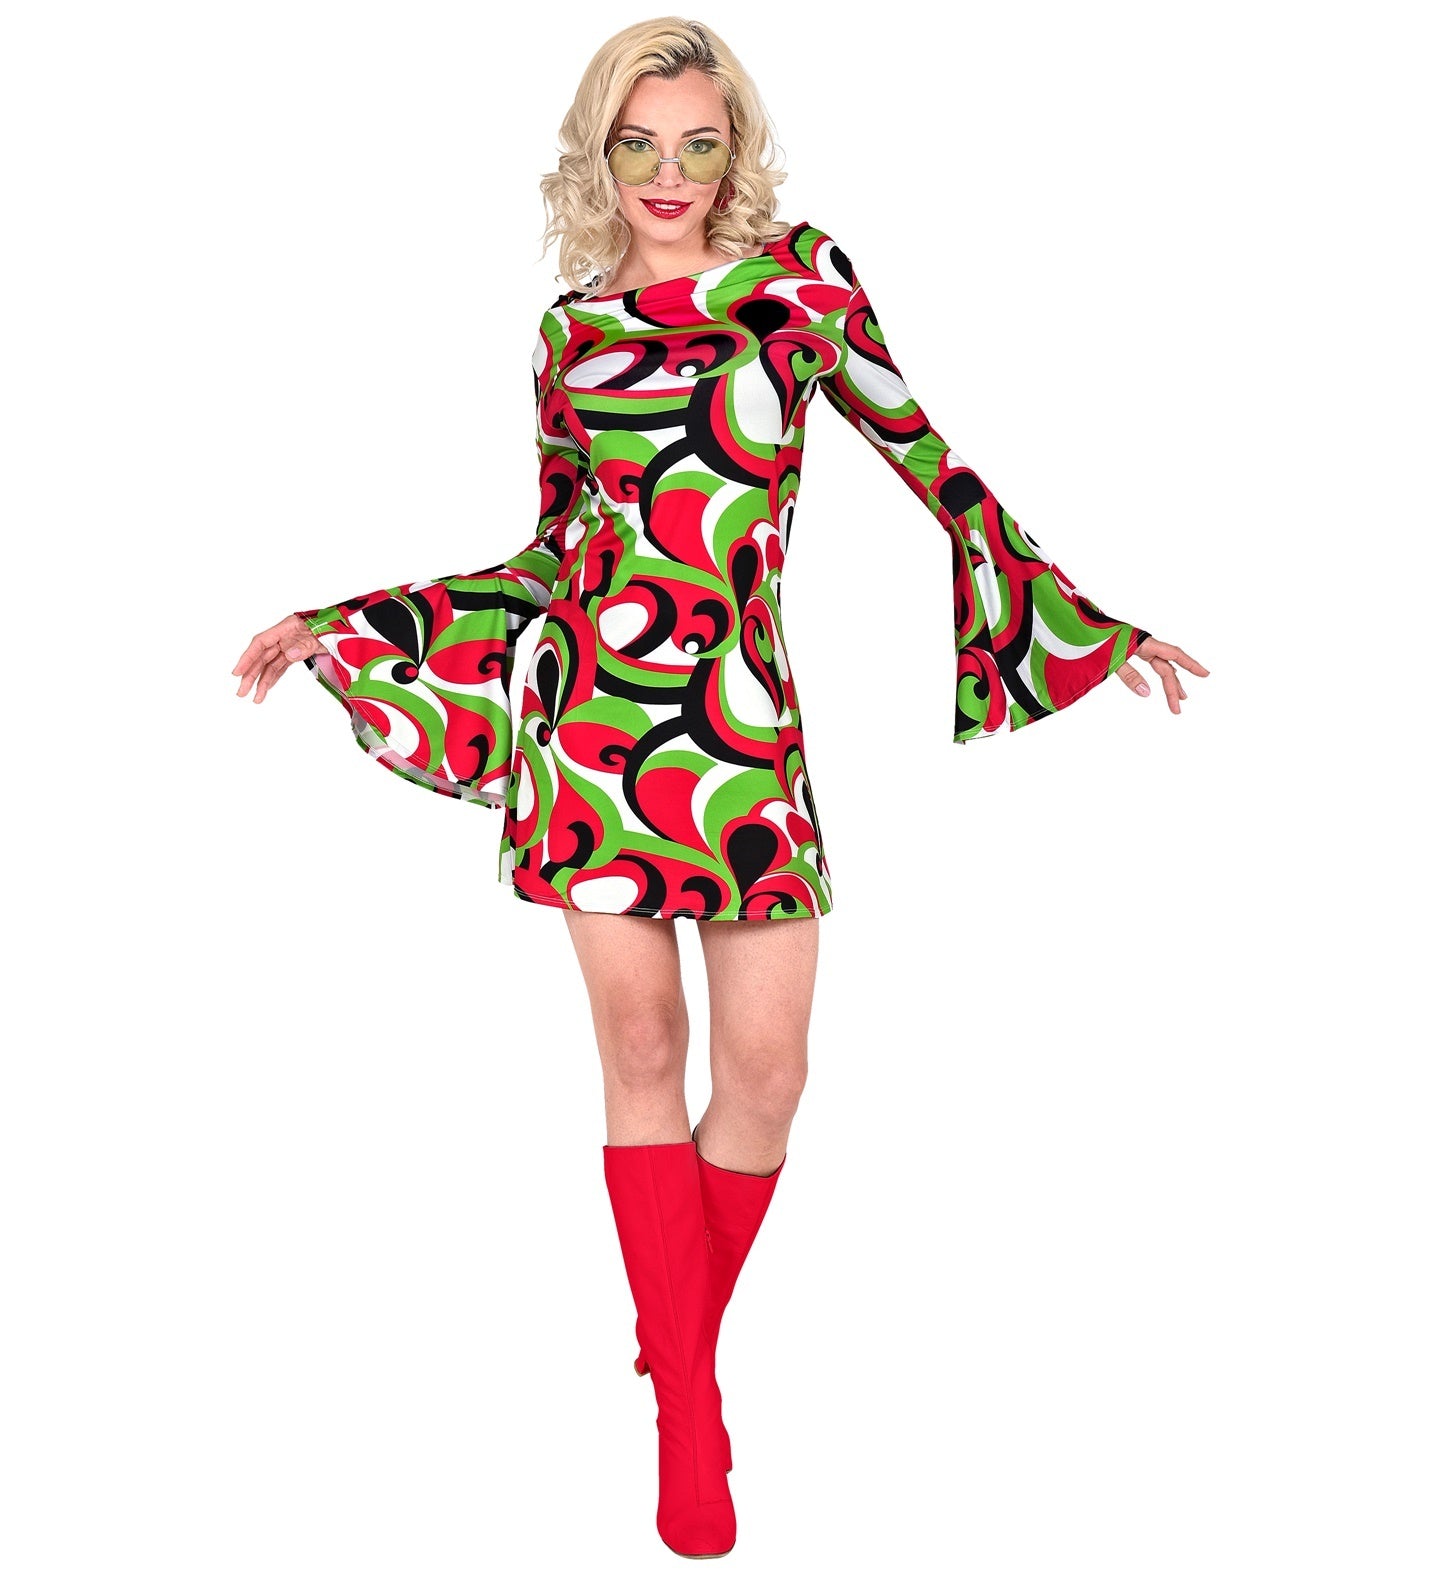 Widmann - Hippie Kostuum - Miss Seventies Jurk Vrouw - rood,groen - XL - Carnavalskleding - Verkleedkleding